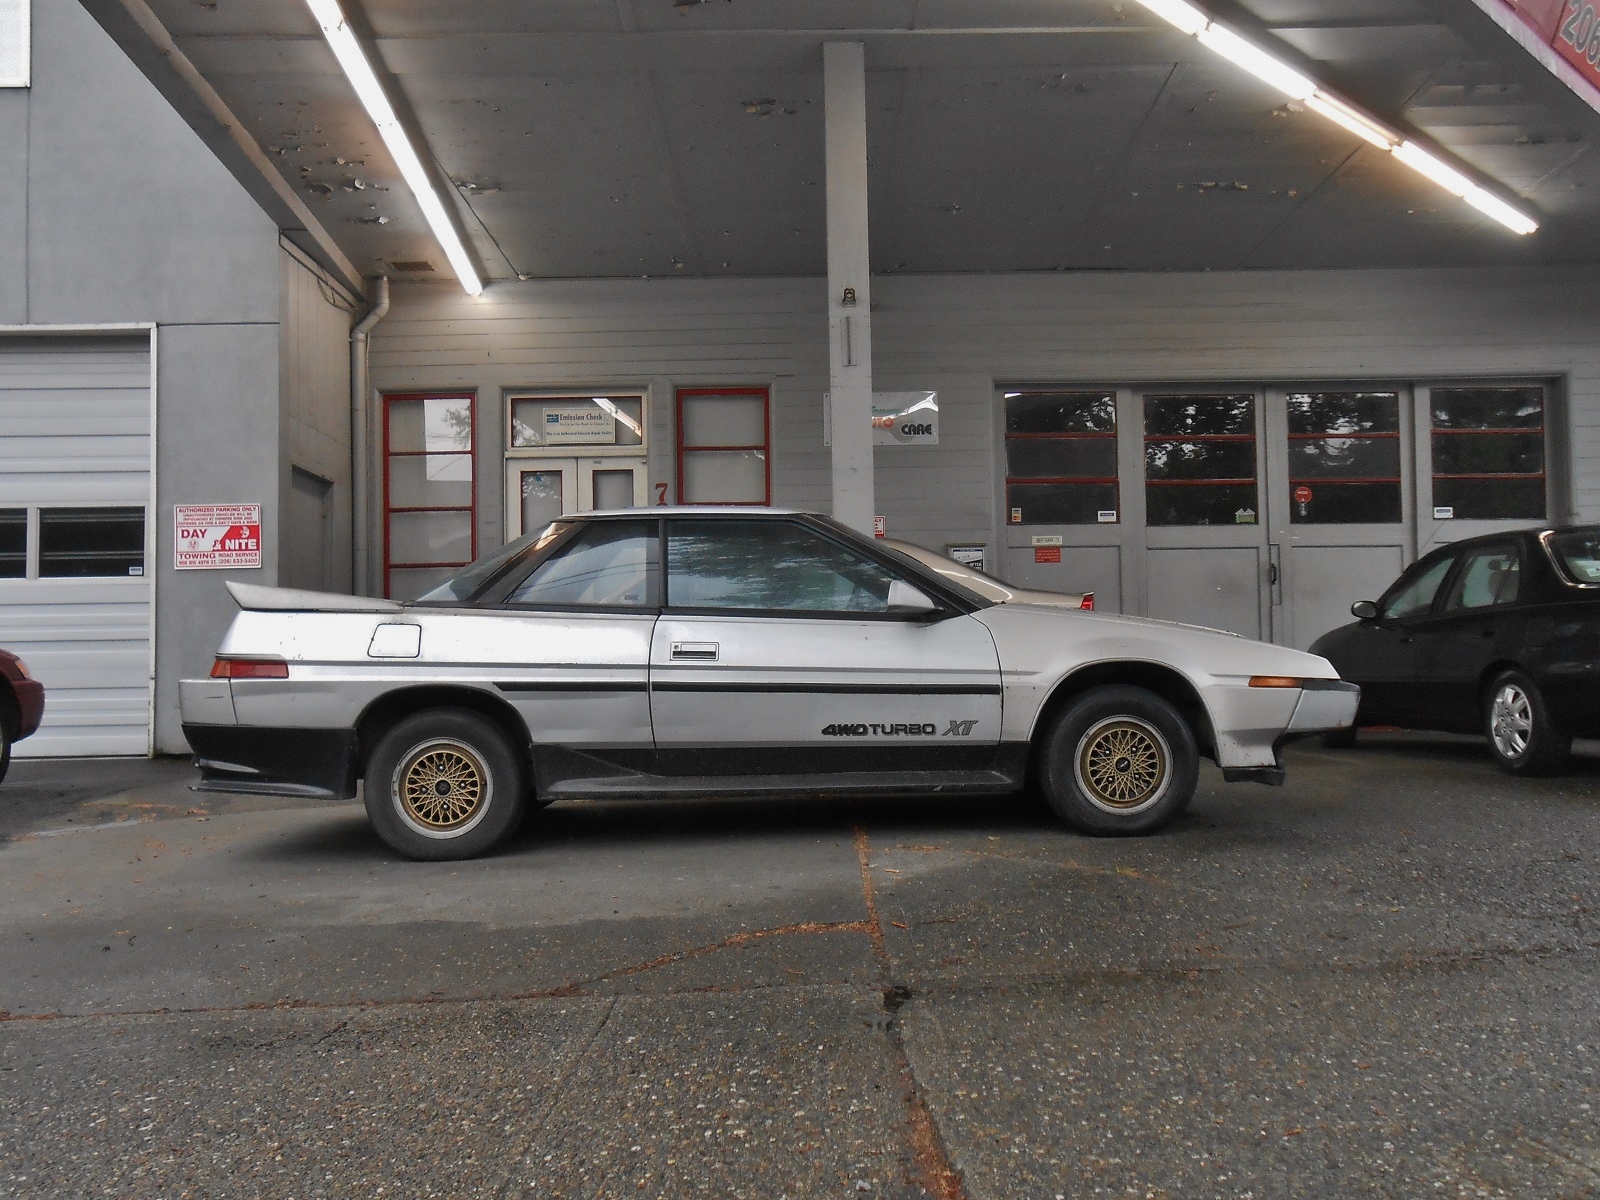 Seattle's Parked Cars 1986 Subaru XT Turbo